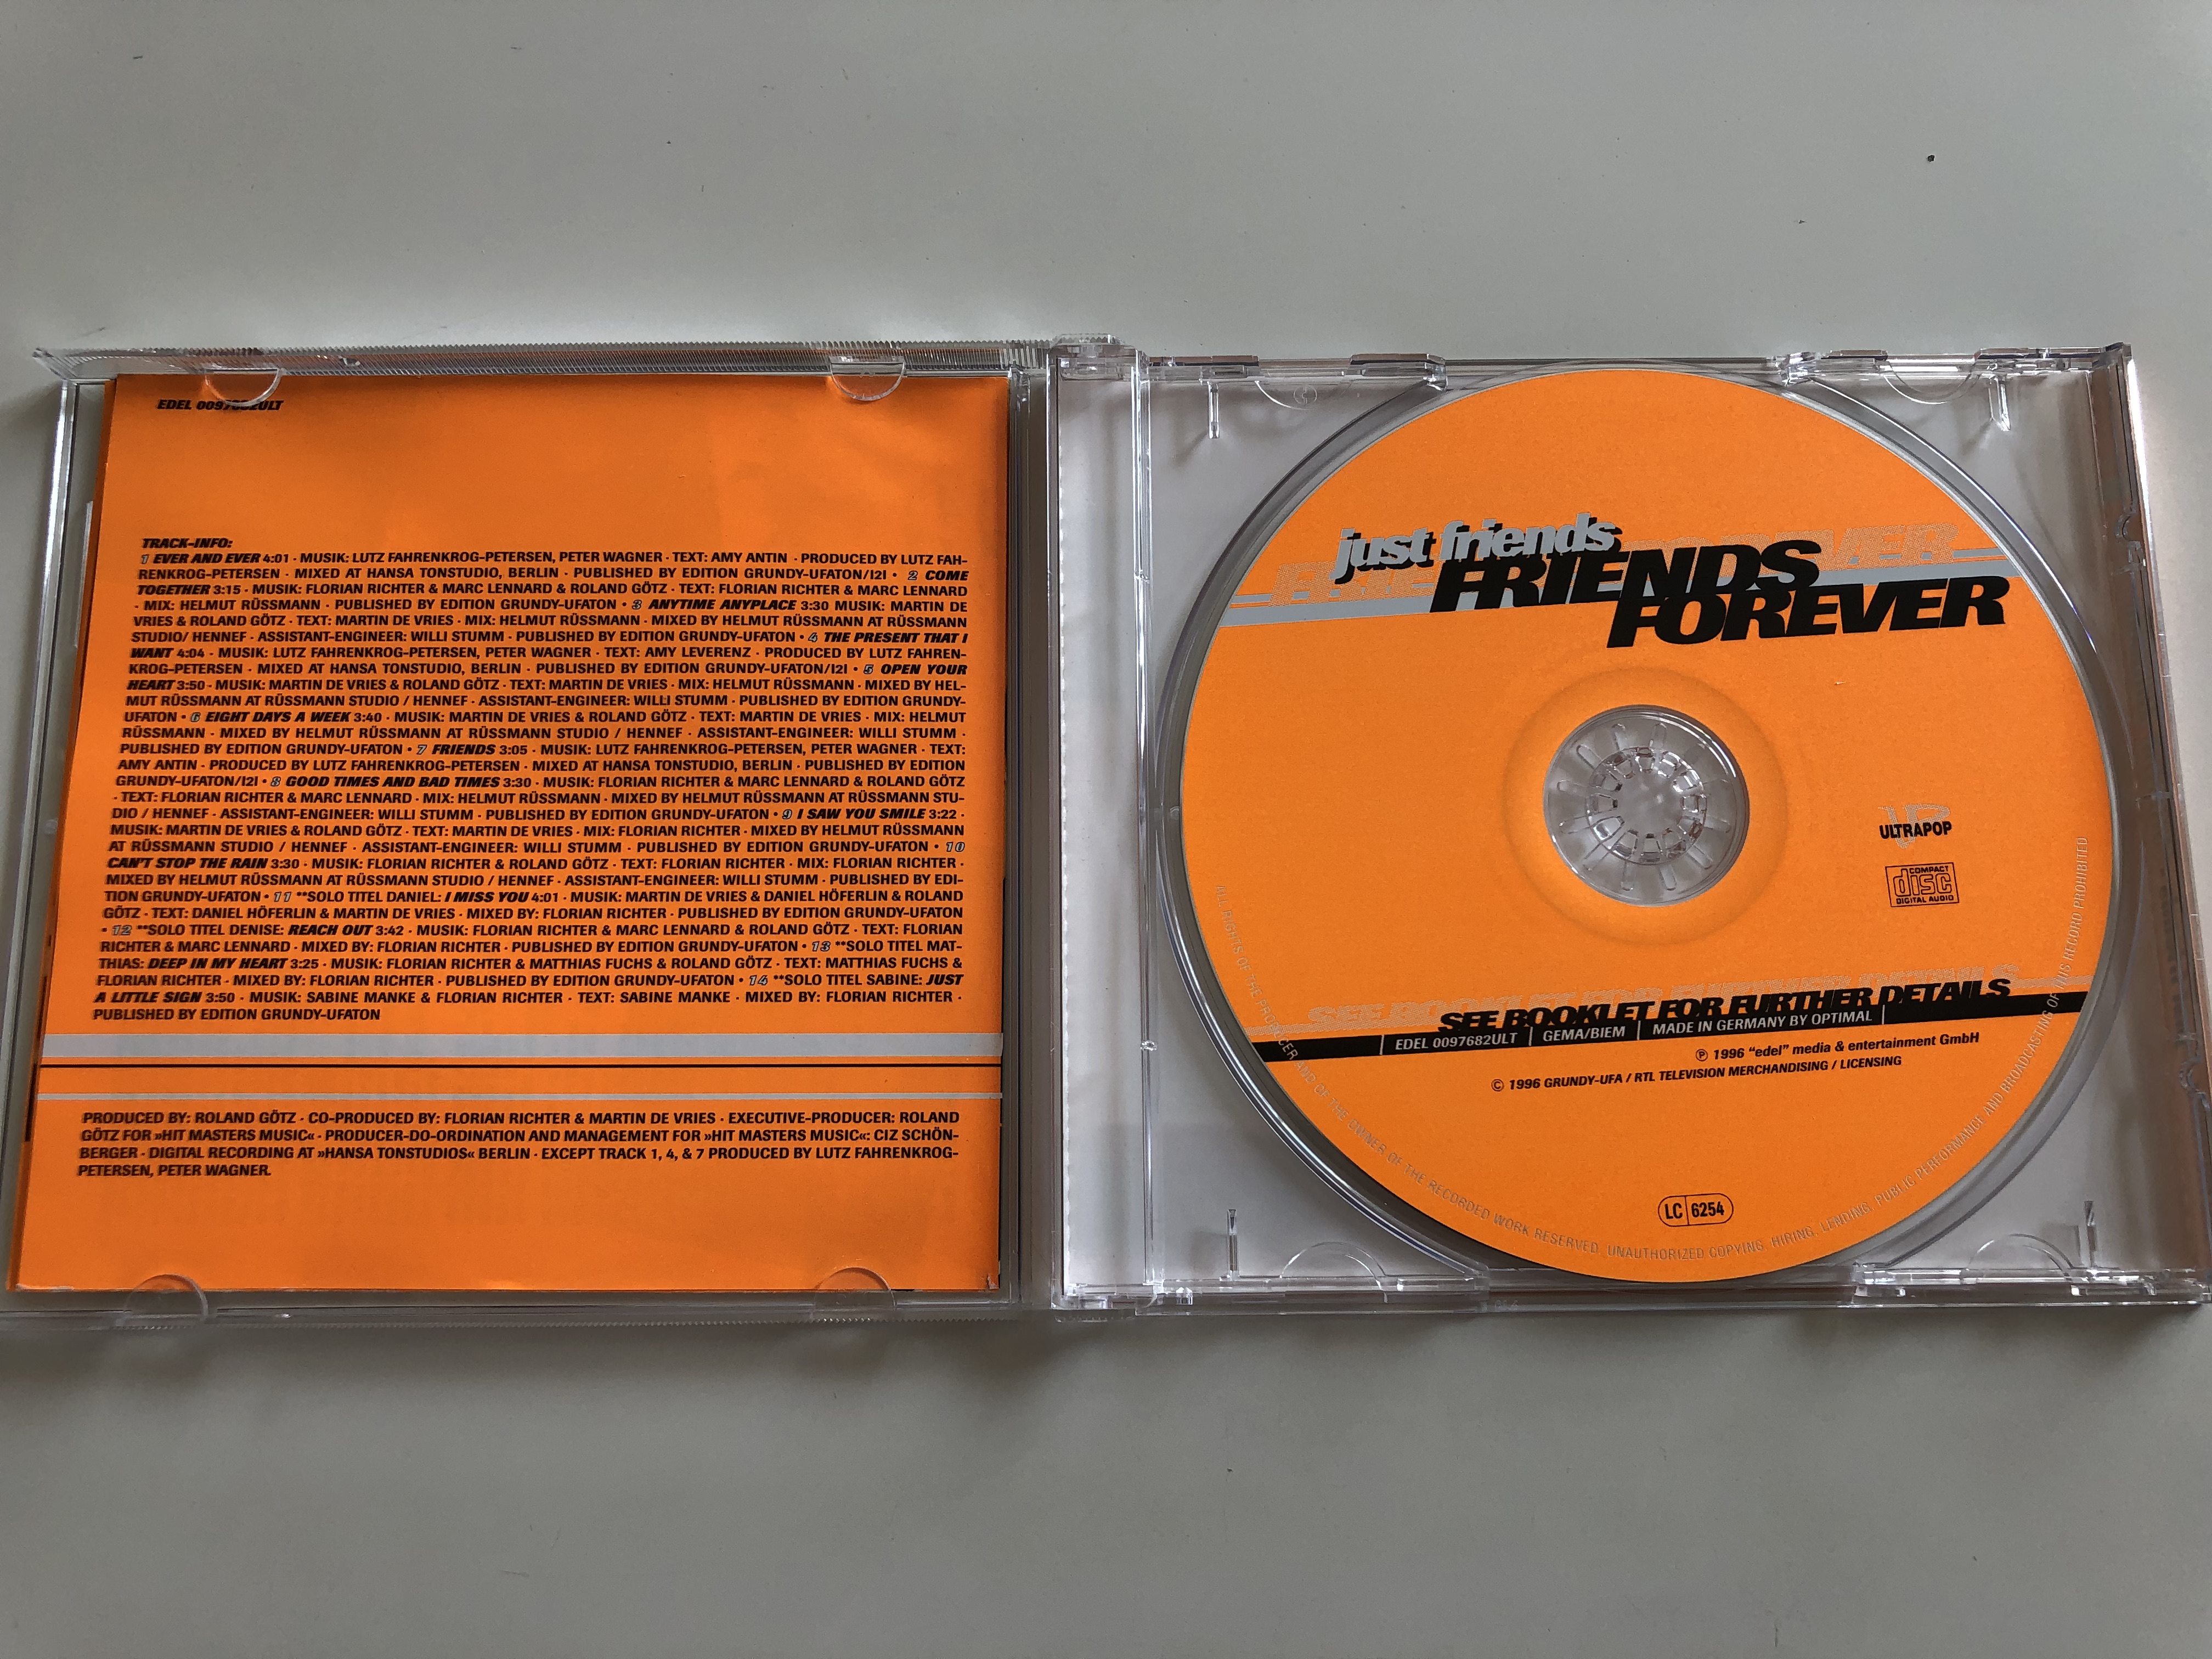 just-friends-friends-forever-audio-cd-1996-ultrapop-cd-0097682ult-2-.jpg